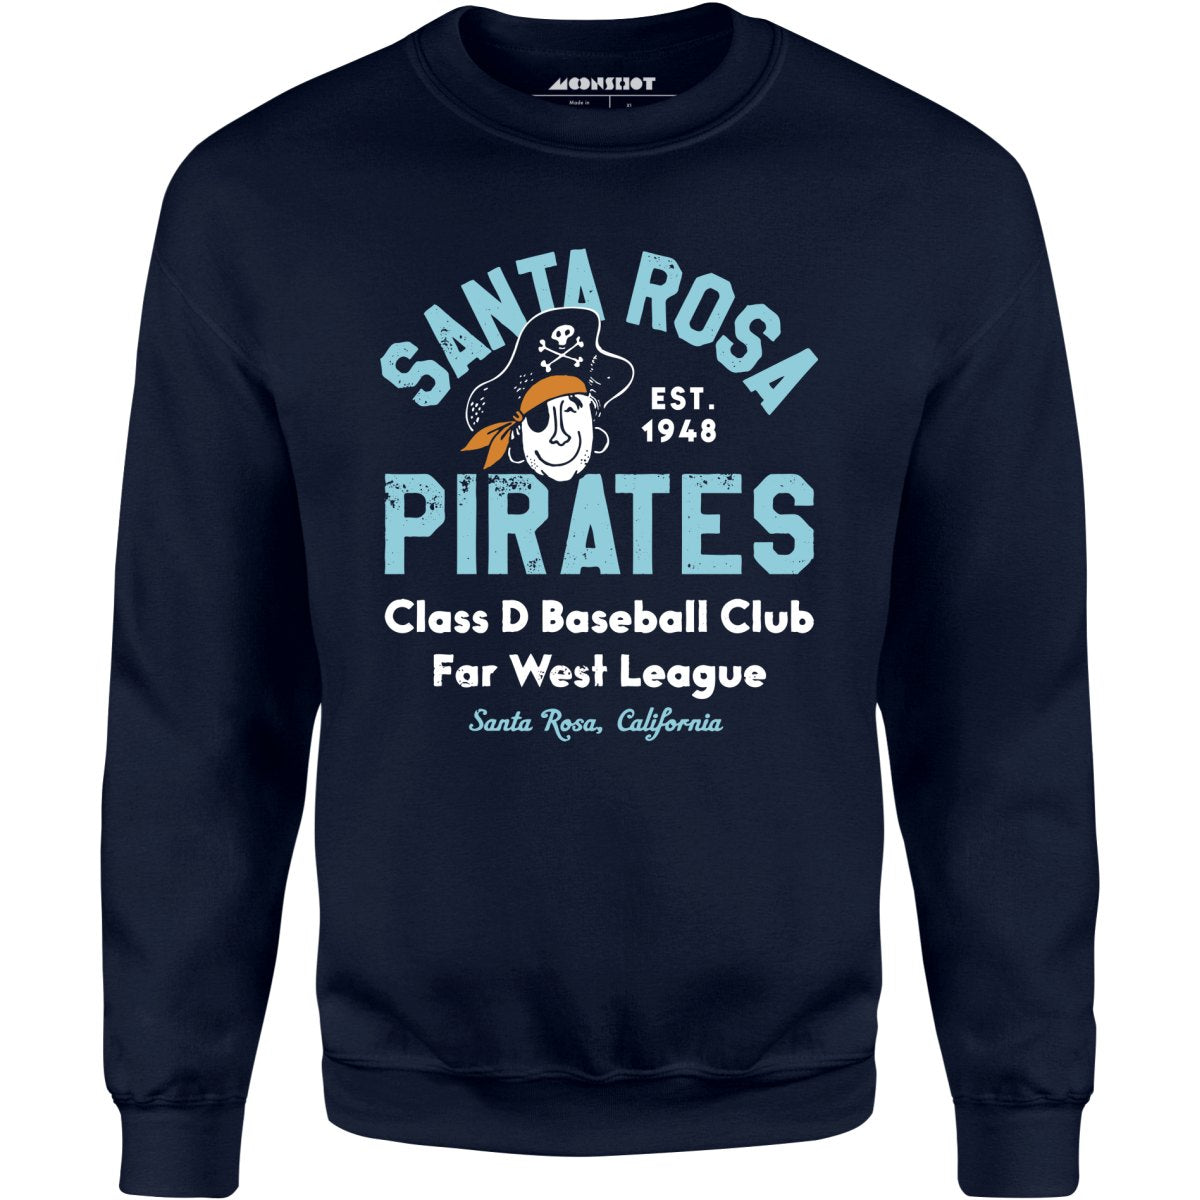 Santa Rosa Pirates - California - Vintage Defunct Baseball Teams - Unisex Sweatshirt